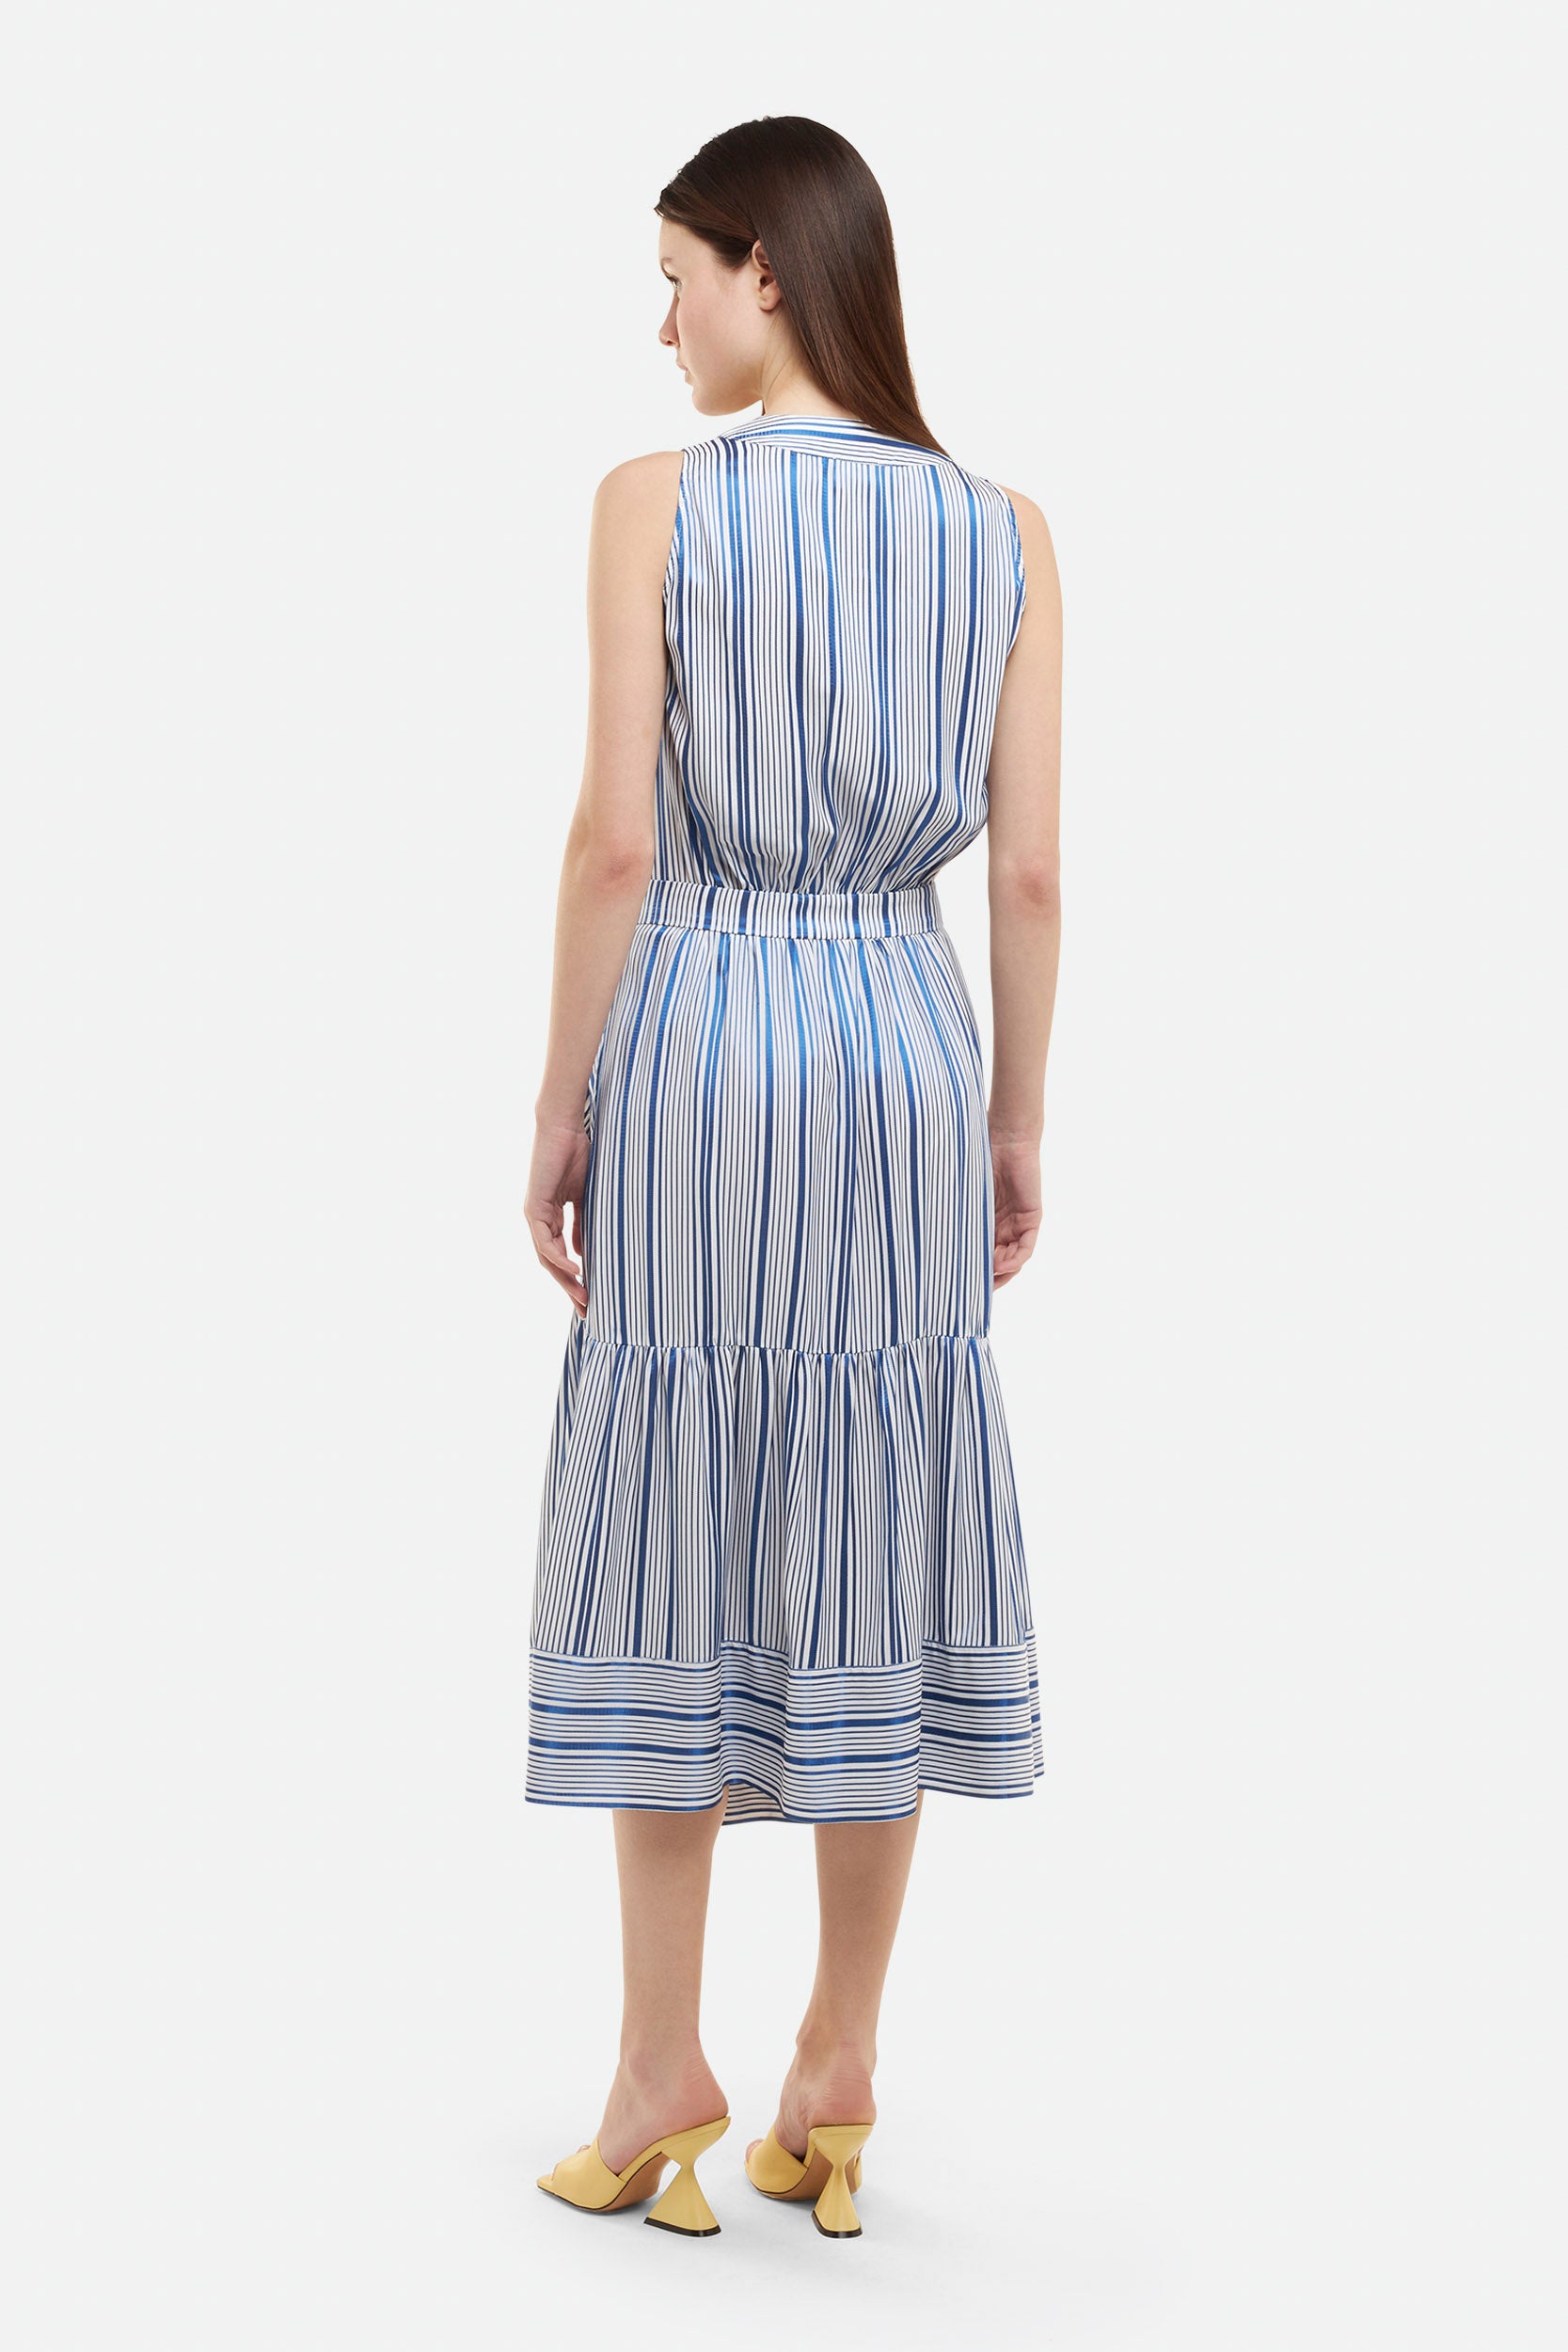 Elisabetta Franchi Blue and White Shirt Dress